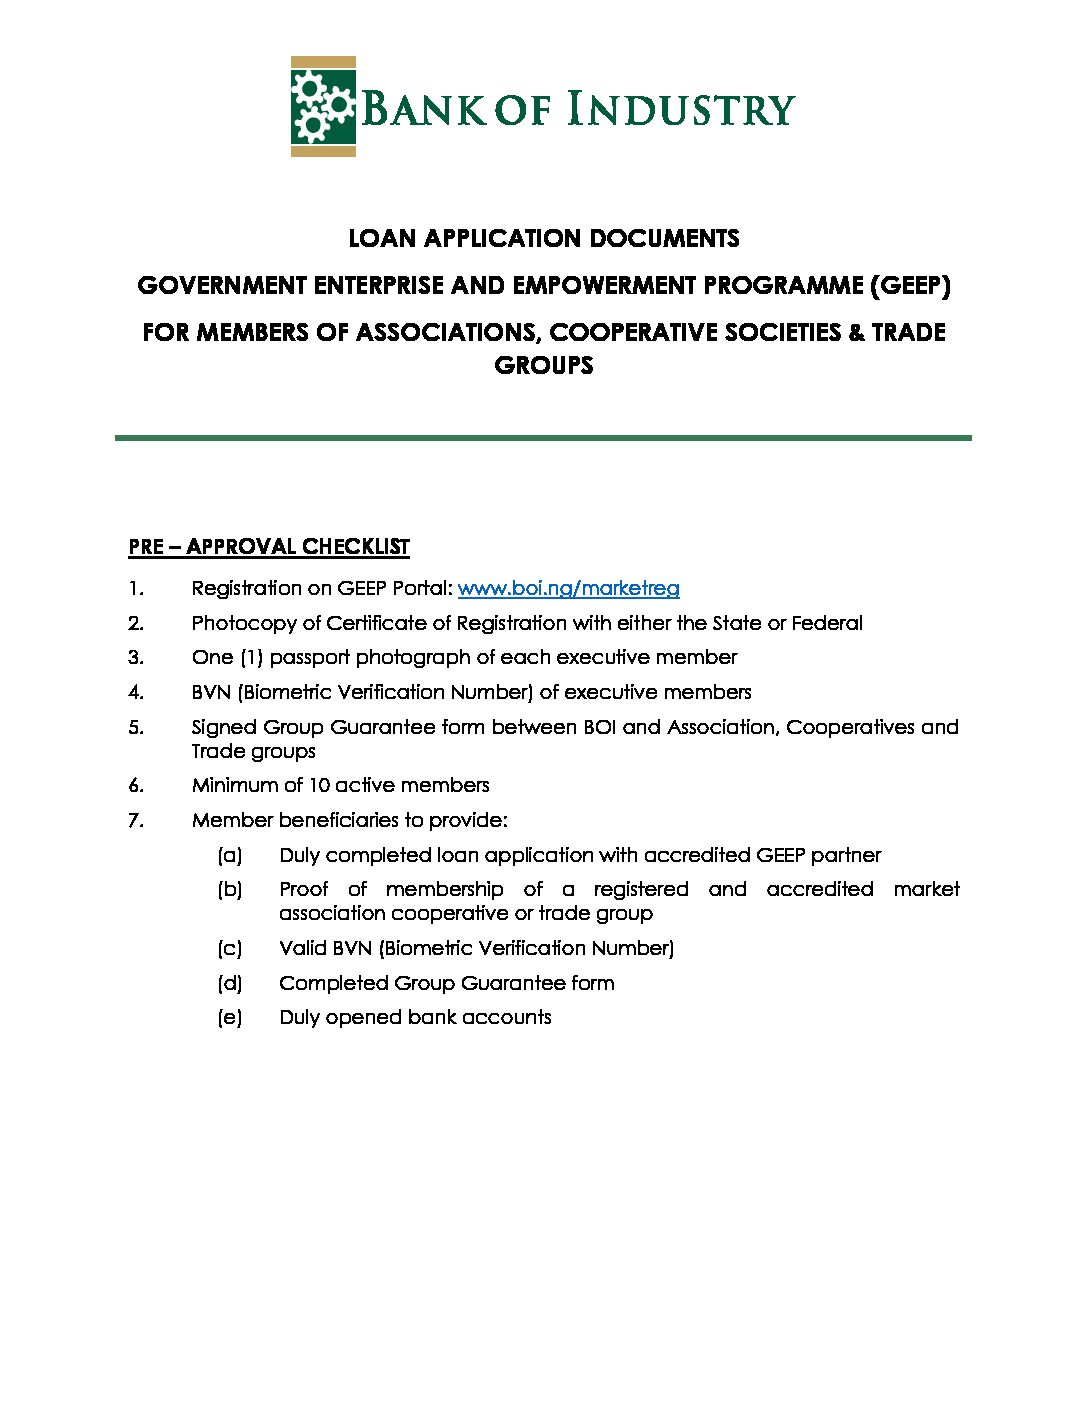 LOAN APPLICATION CHECKLIST GEEP 1 pdf FarmerMoni loan Application